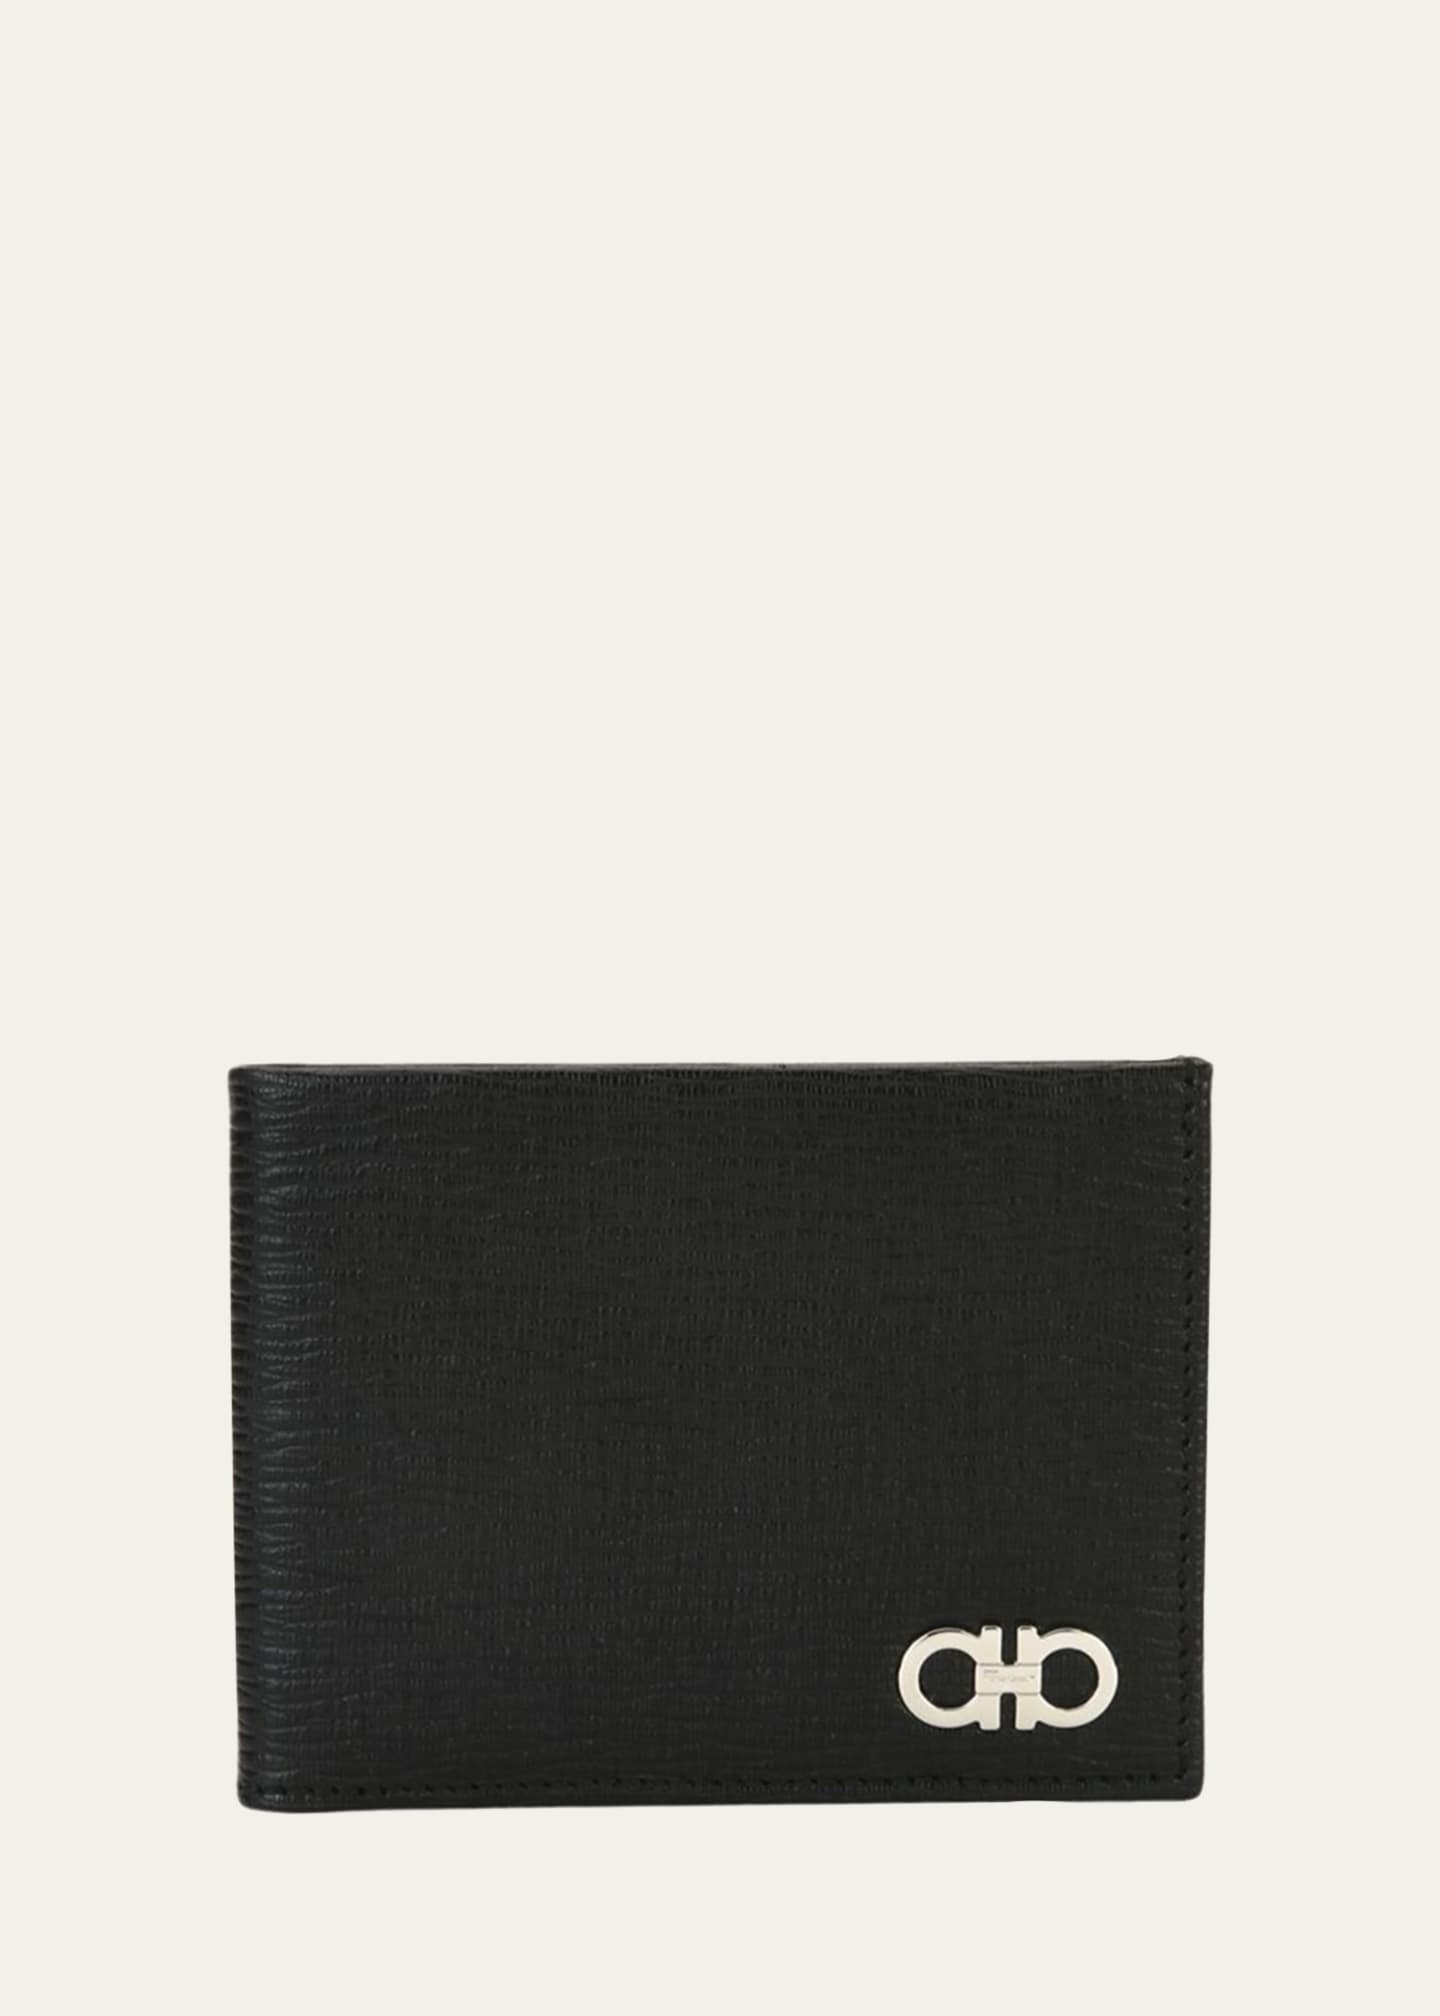 Salvatore Ferragamo Men's Bifold Leather Wallet